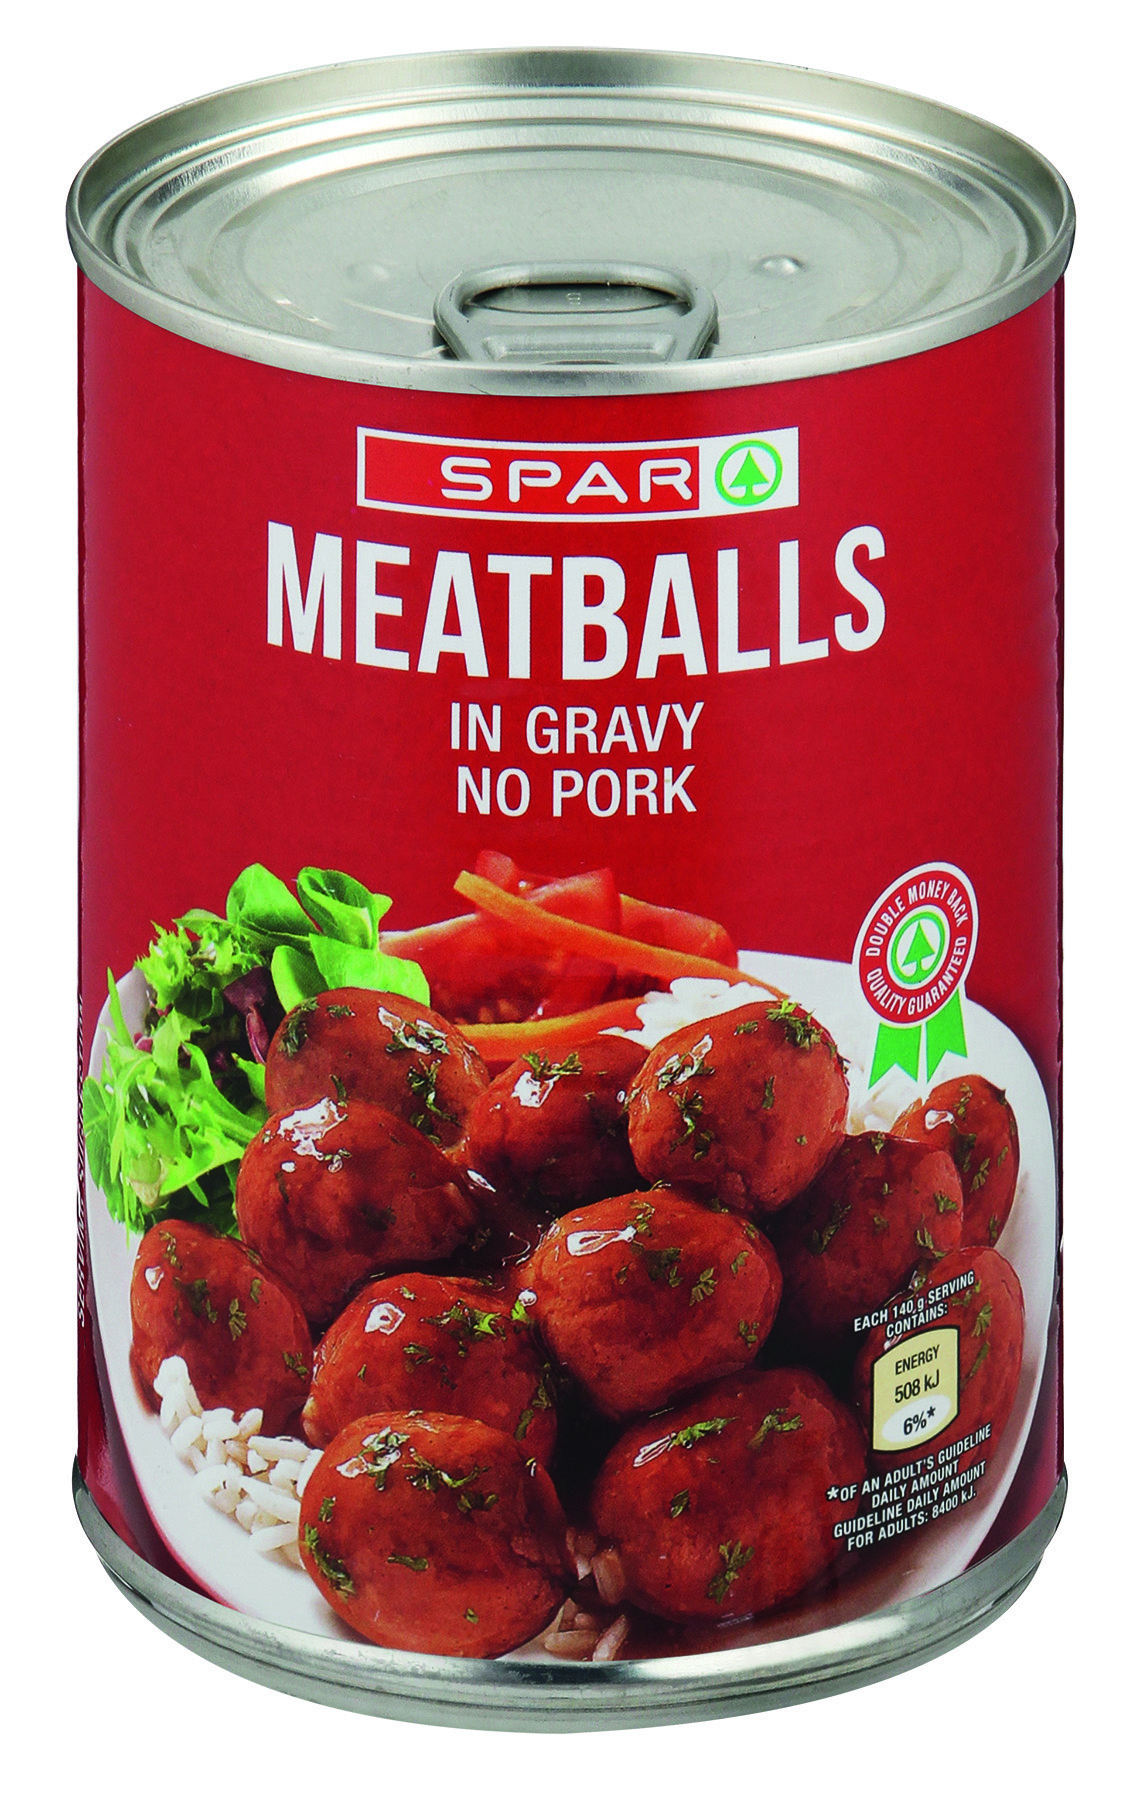 meatballs in gravy no pork